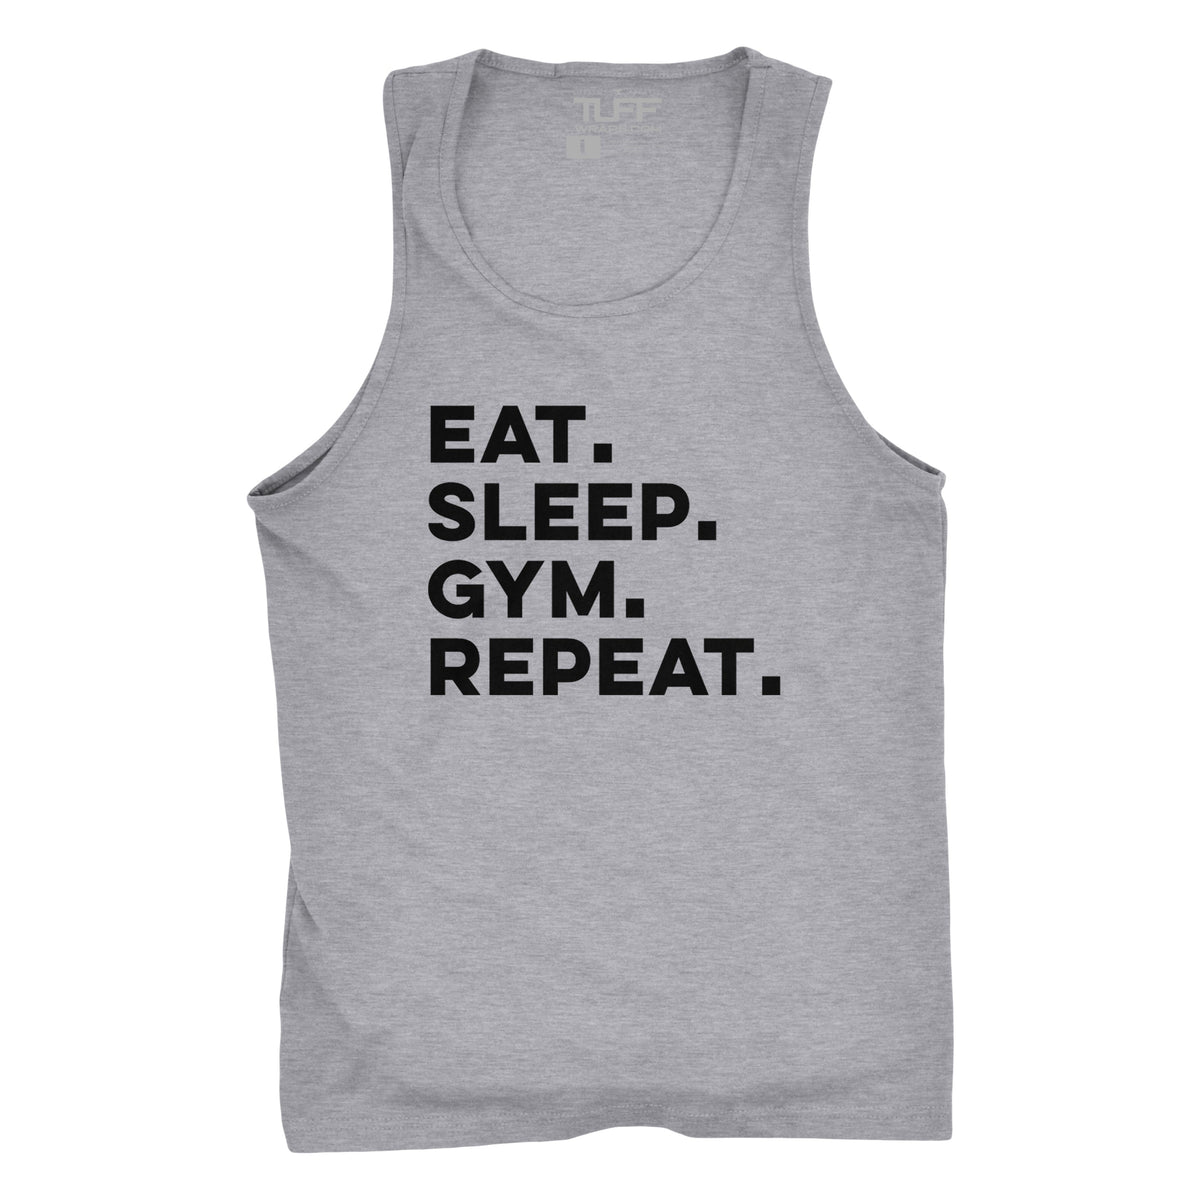 Eat. Sleep. Gym. Repeat. Tank S / Heather Gray TuffWraps.com